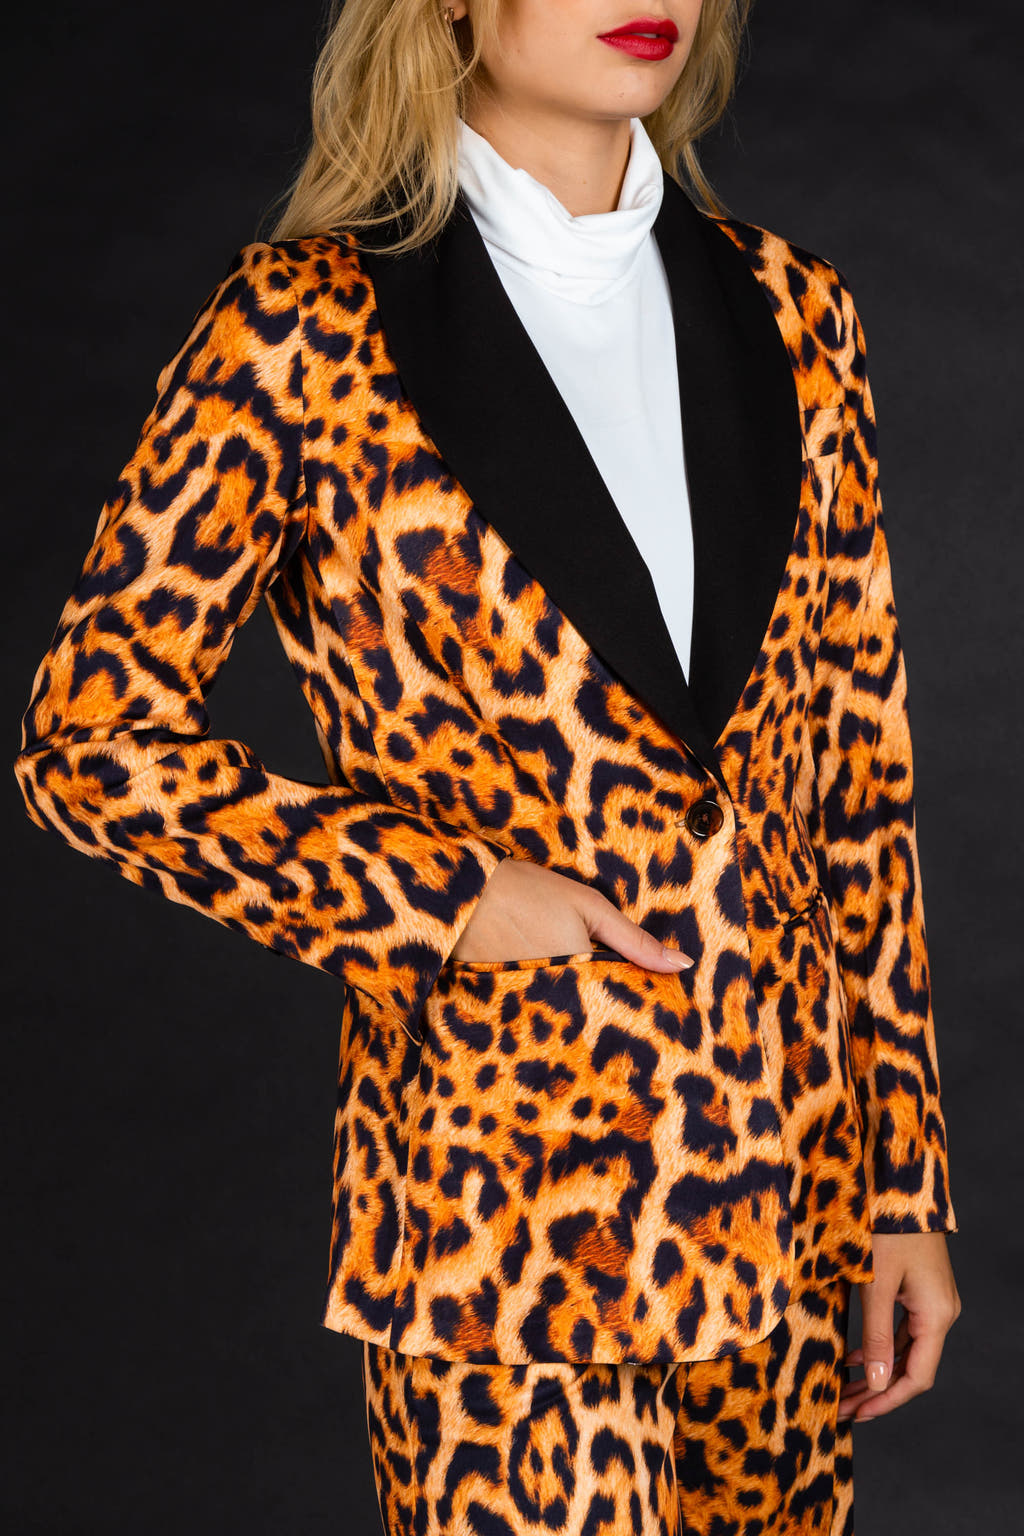 Leopard Print Blazer for Women